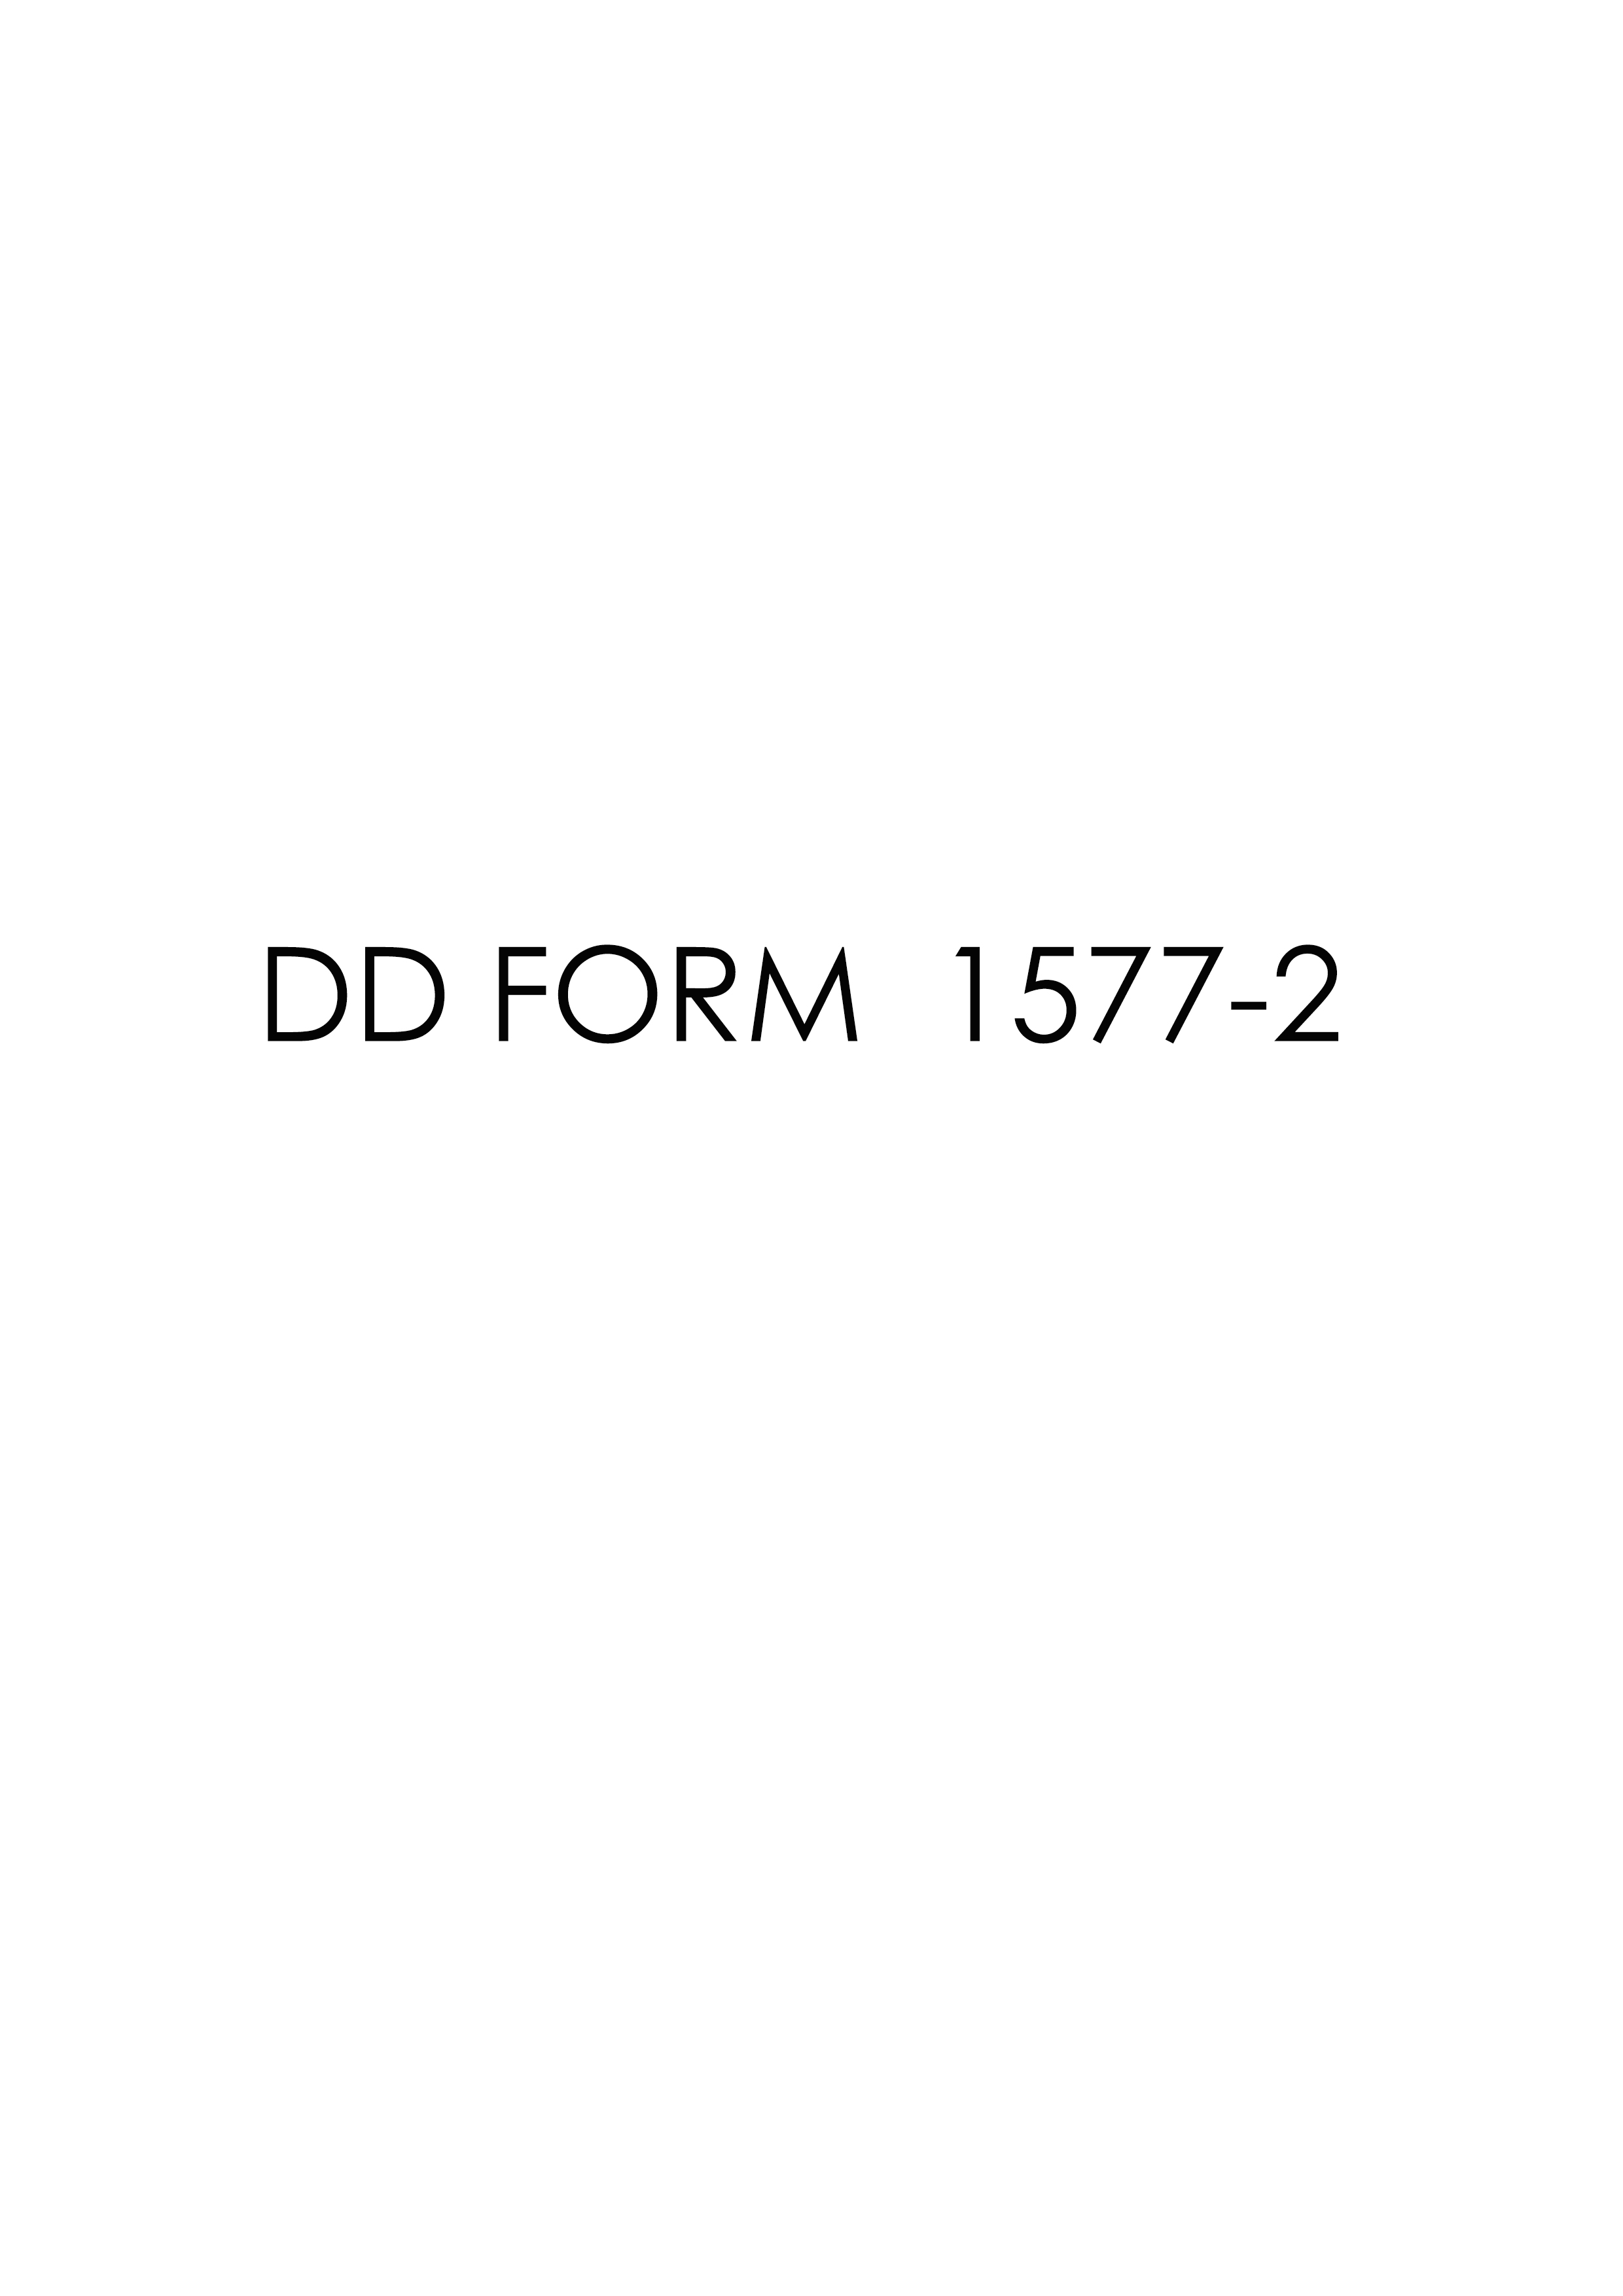 Download dd 1577-2 Form